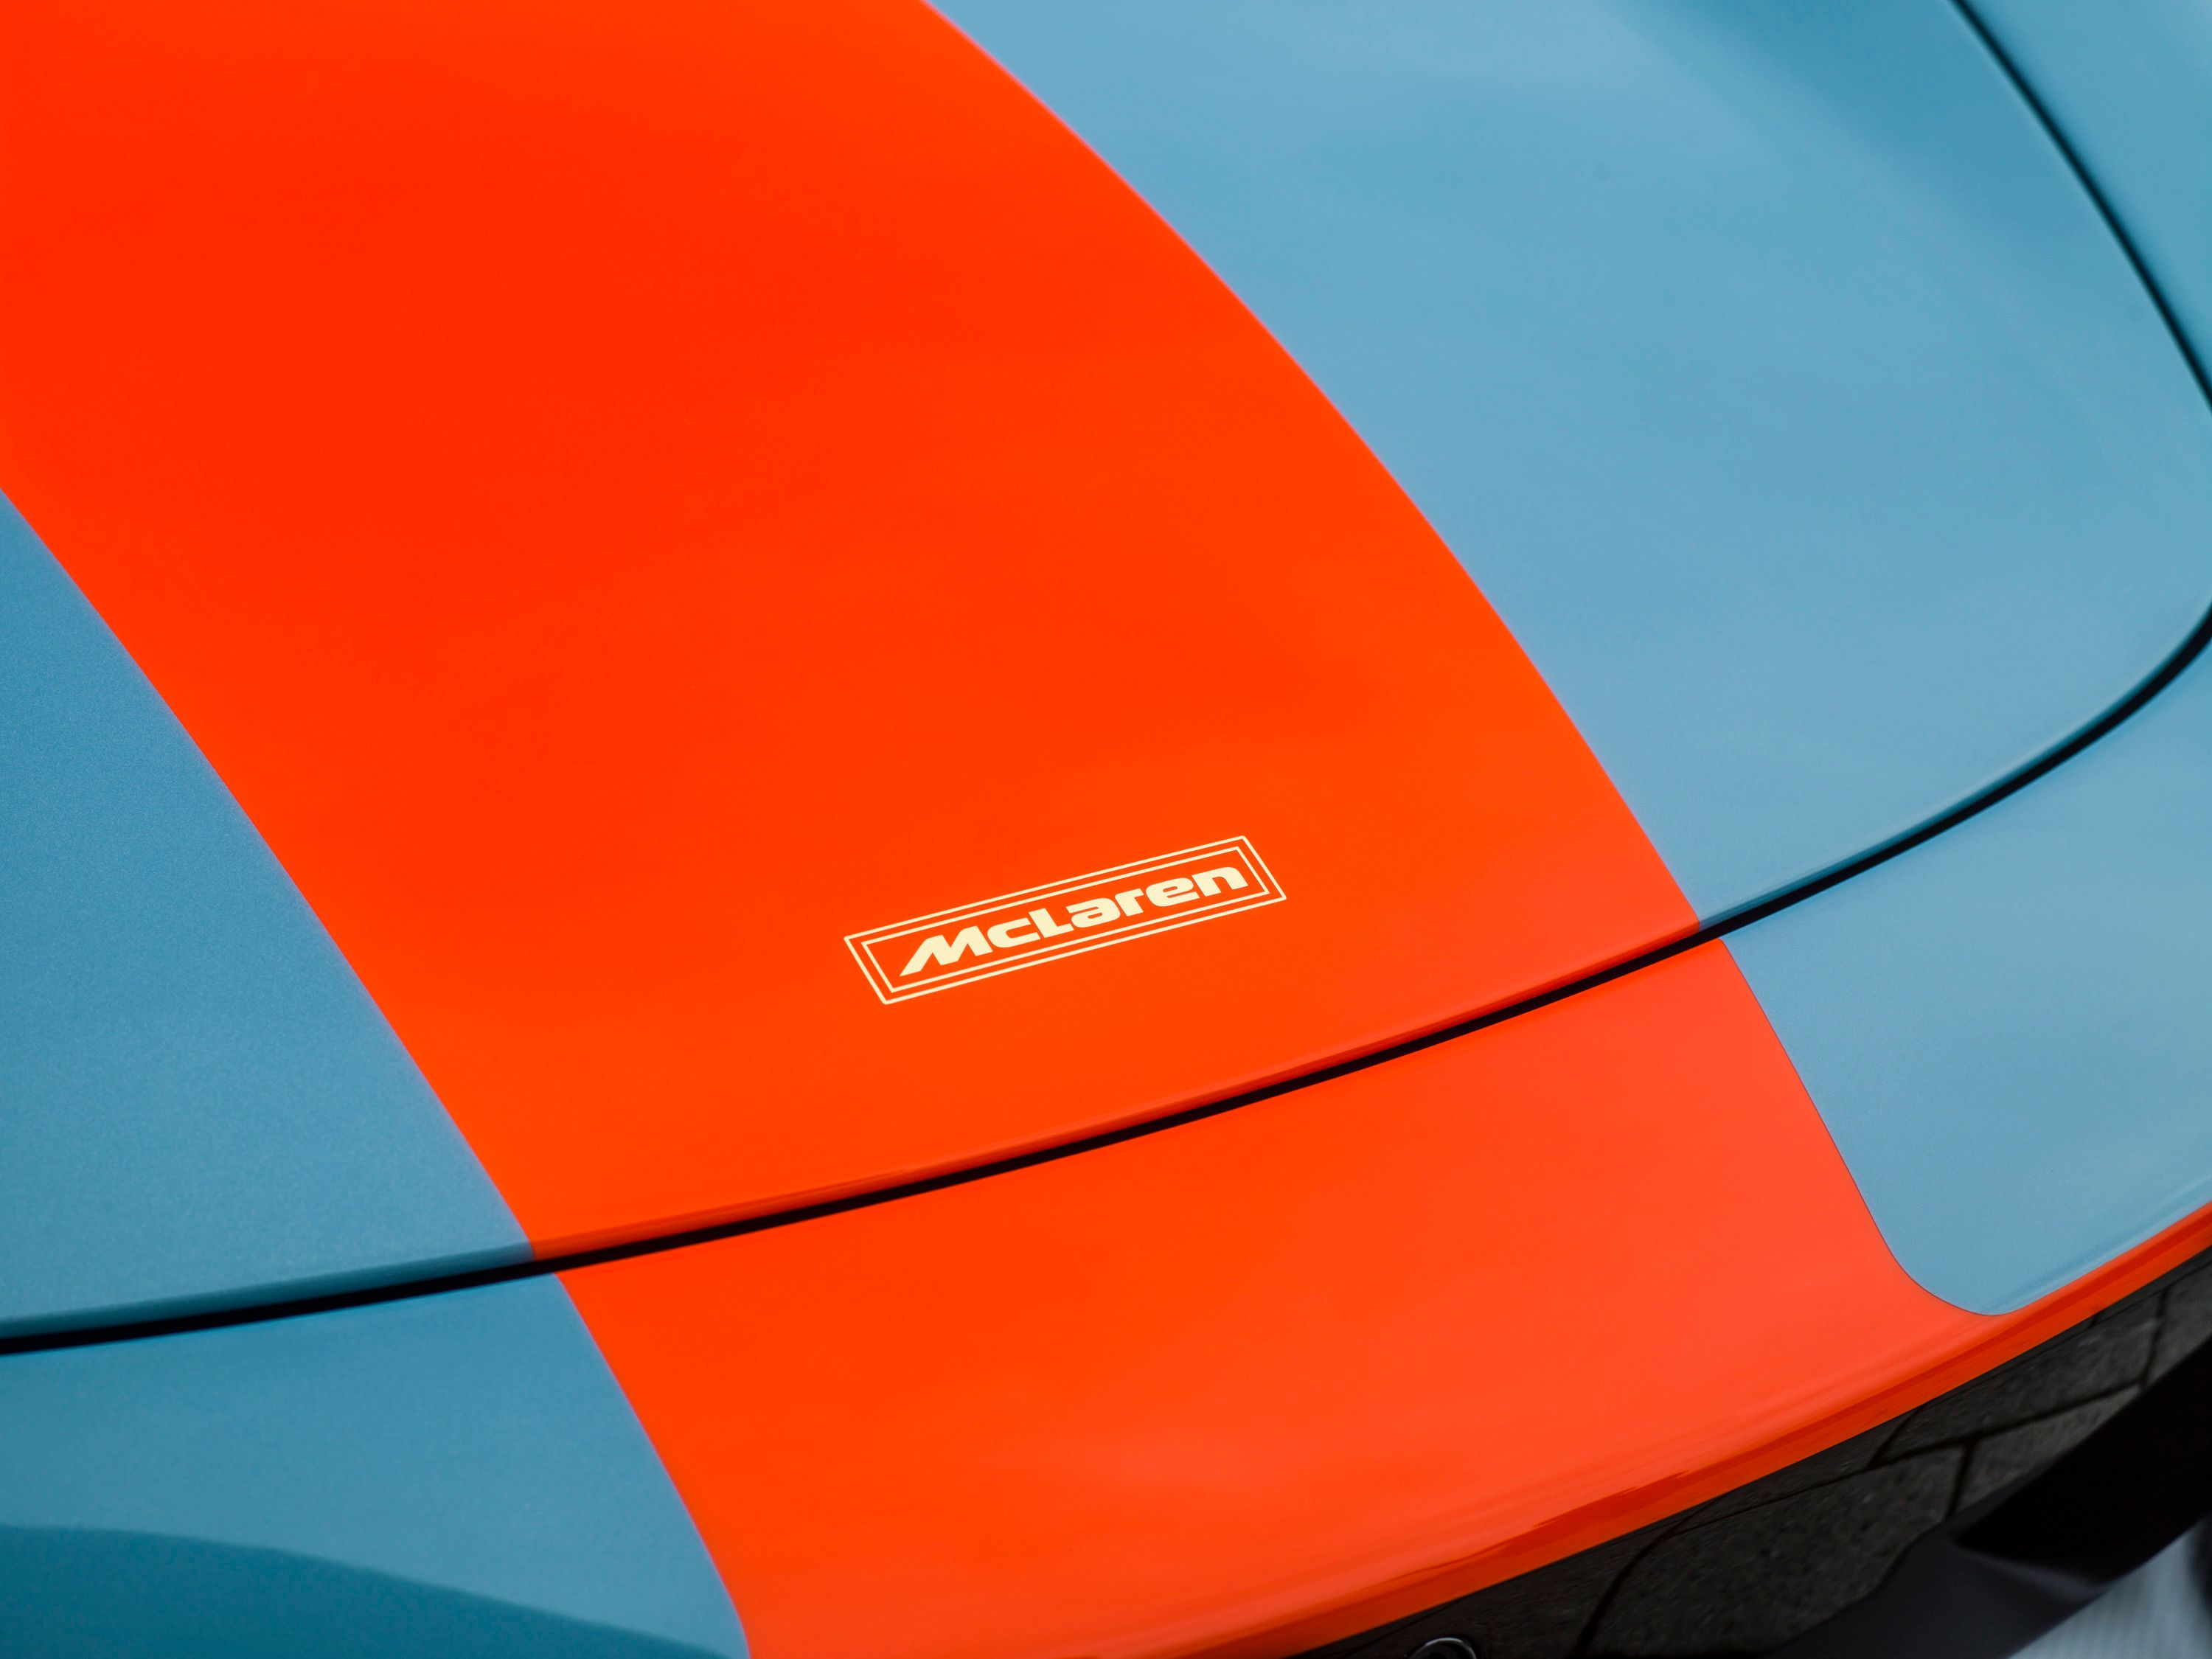 2018 McLaren 675LT MSO Gulf Racing Edition